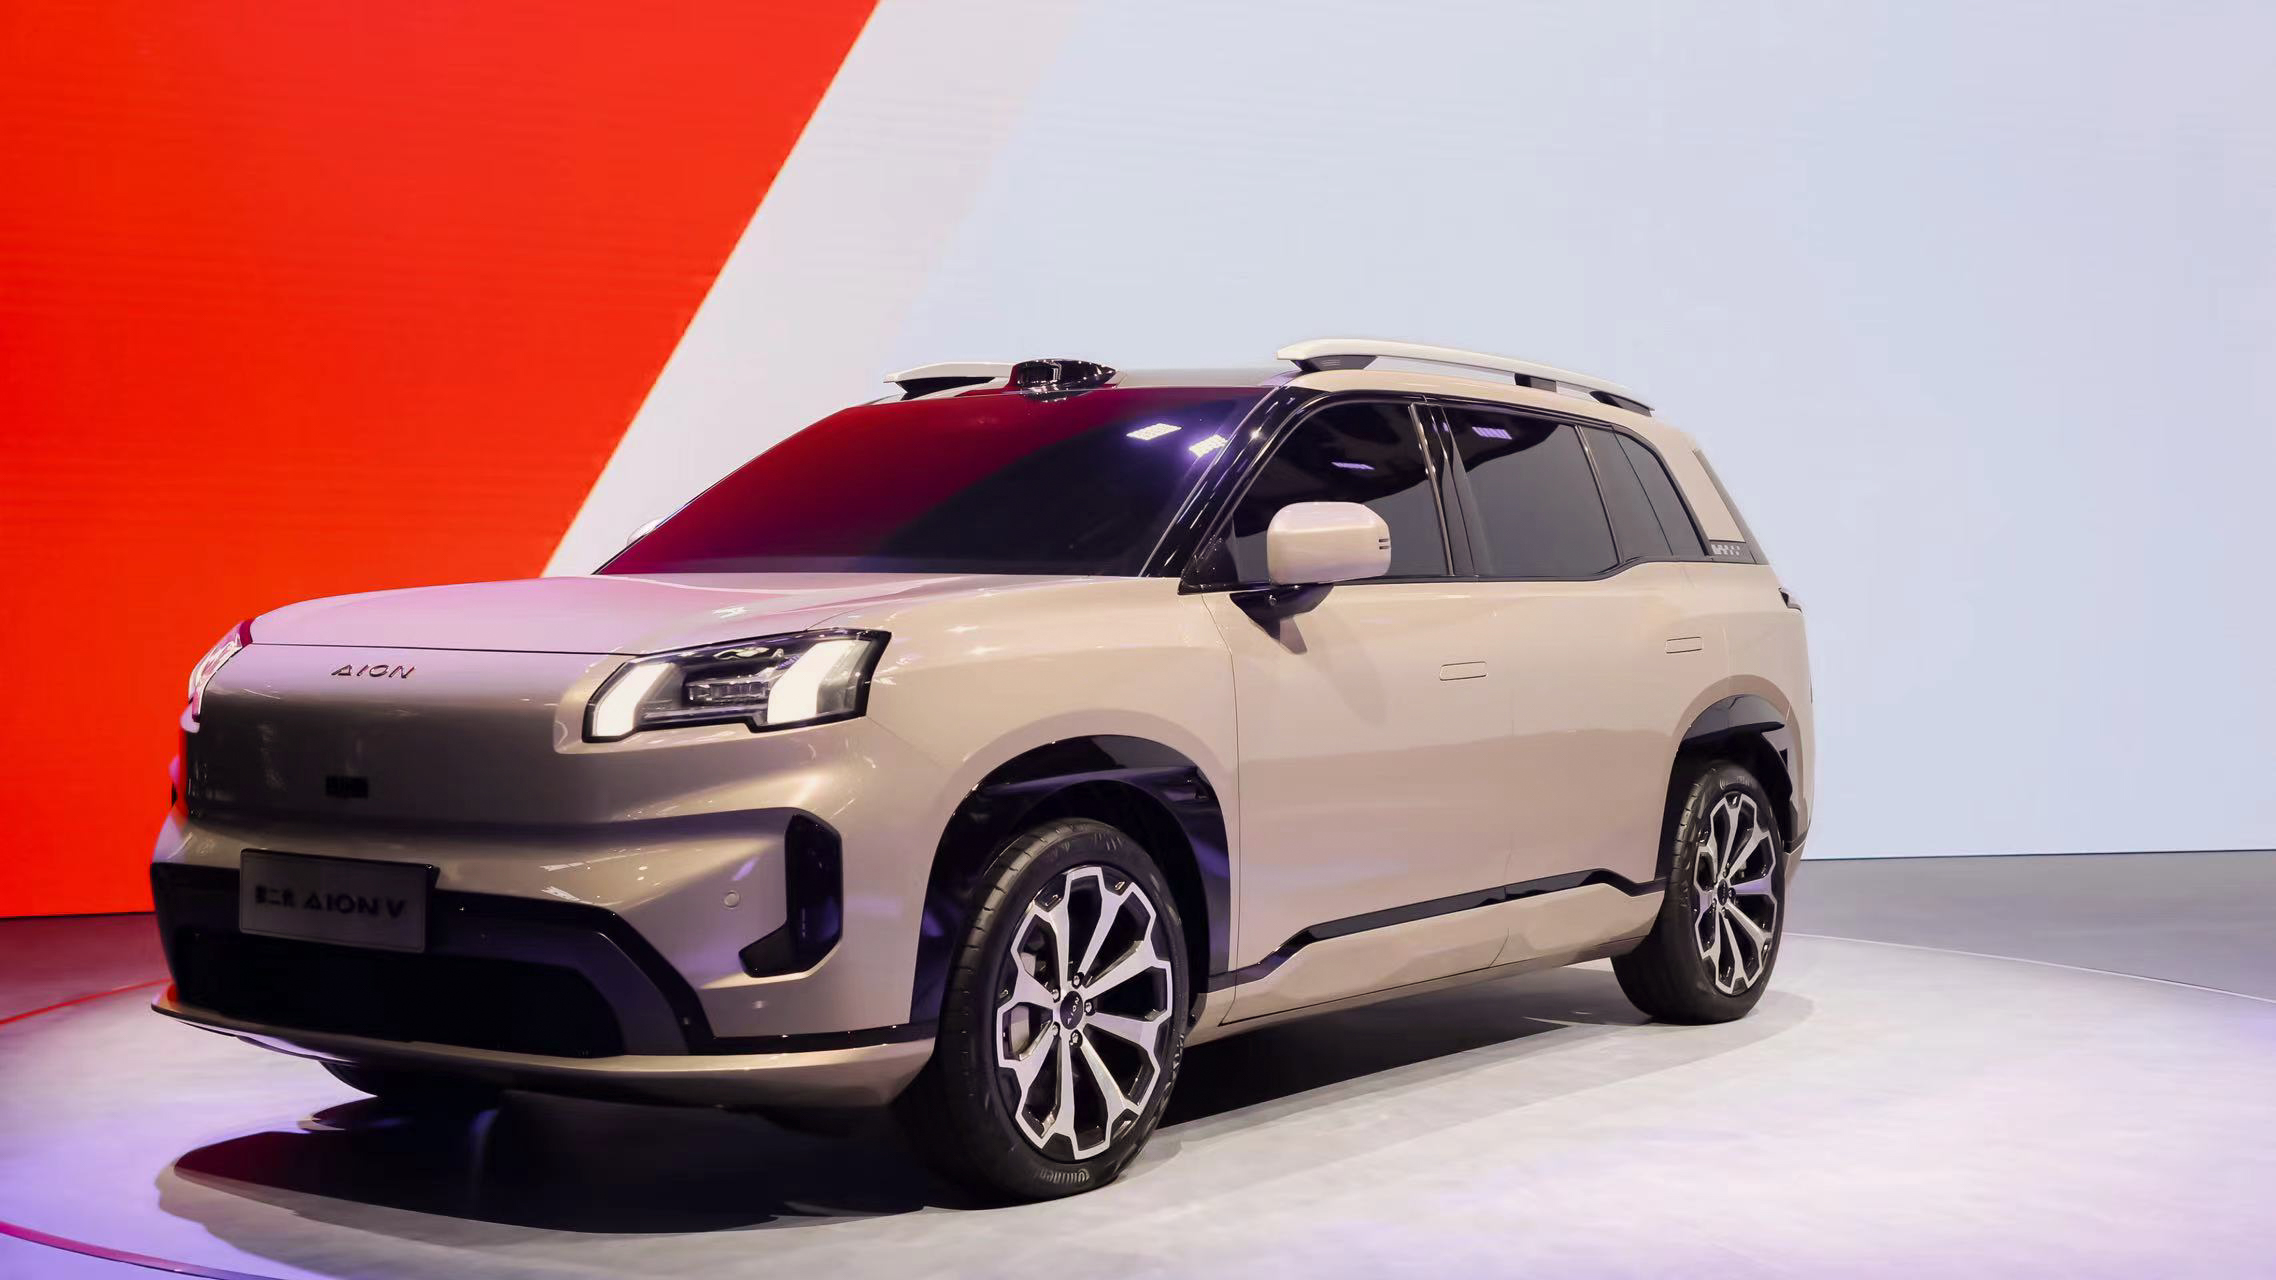 GAC Luncurkan SUV Aion V Generasi Kedua, Sudah Dilengkapi Teknologi AI